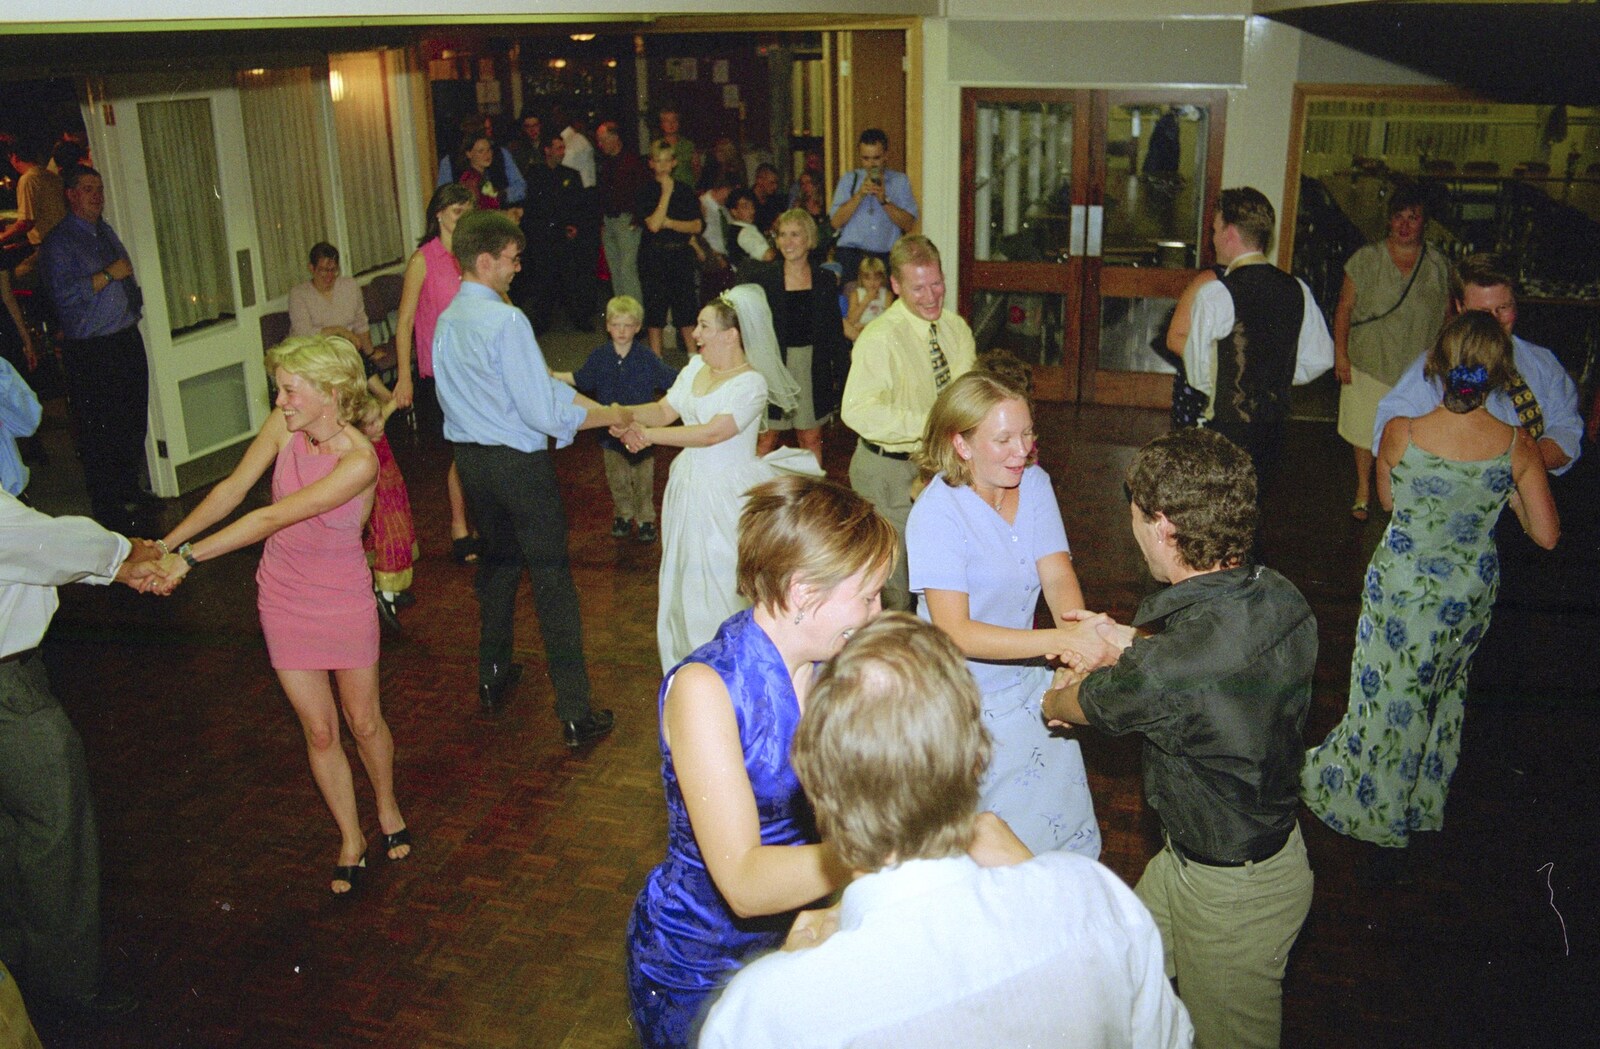 More dancing guests from Joe and Lesley's CISU Wedding, Ipswich, Suffolk - 30th July 1998